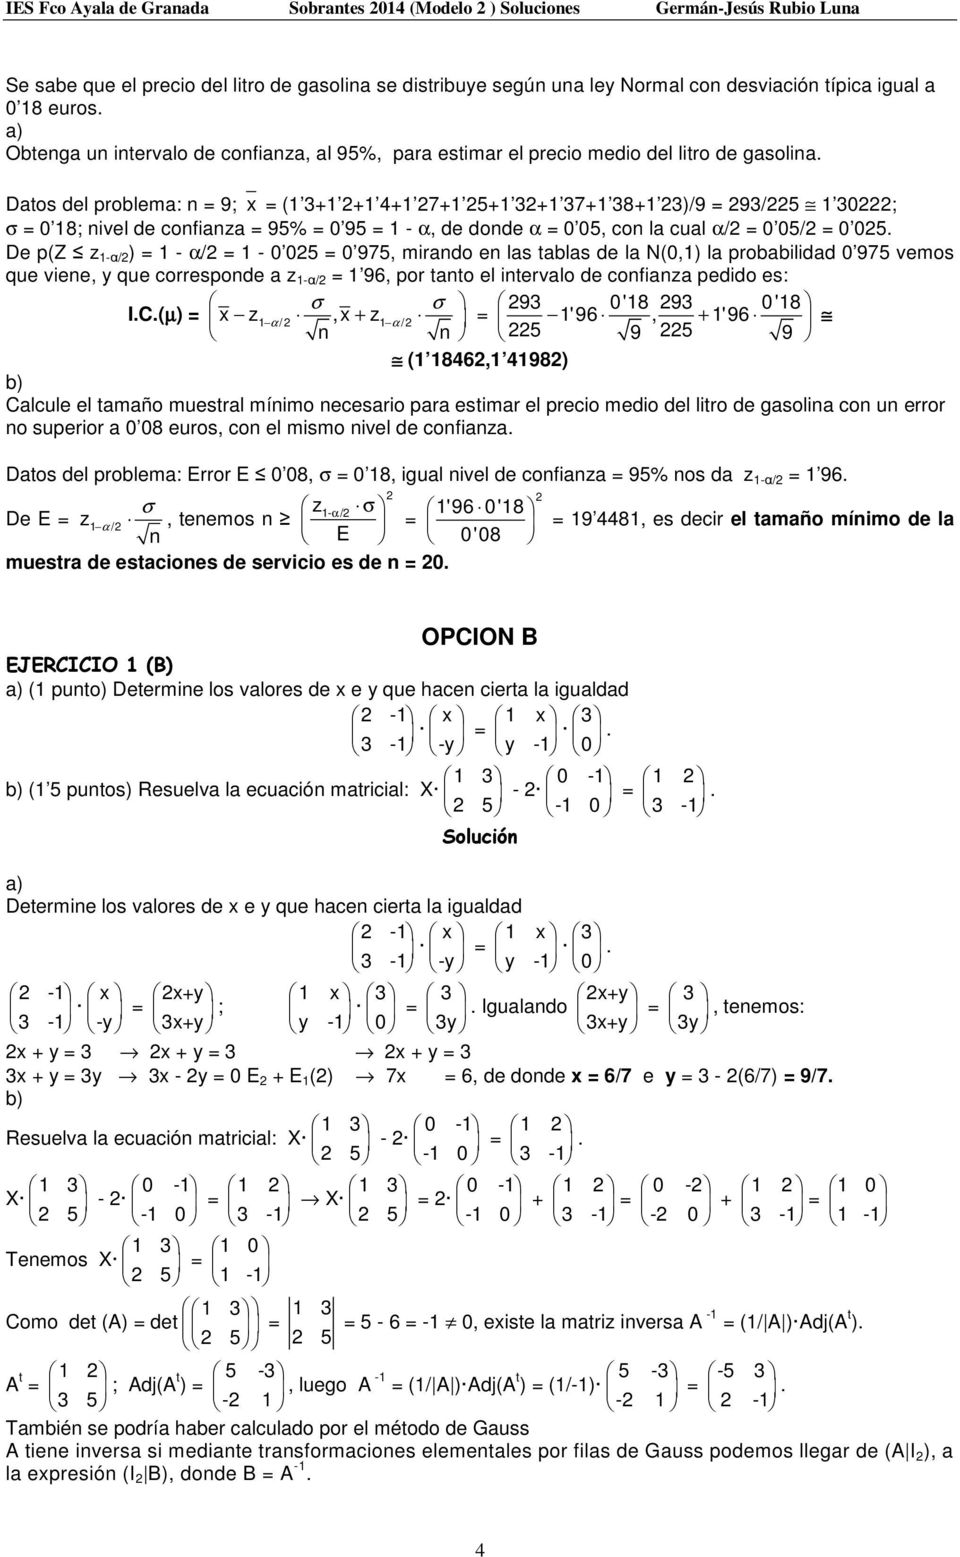 Datos del problema: = 9; x = (1 3+1 +1 4+1 7+1 5+1 3+1 37+1 38+1 3)/9 = 93/5 1 30; σ = 0 18; ivel de cofiaza = 95% = 0 95 = 1 - α, de dode α = 0 05, co la cual α/ = 0 05/ = 0 05.